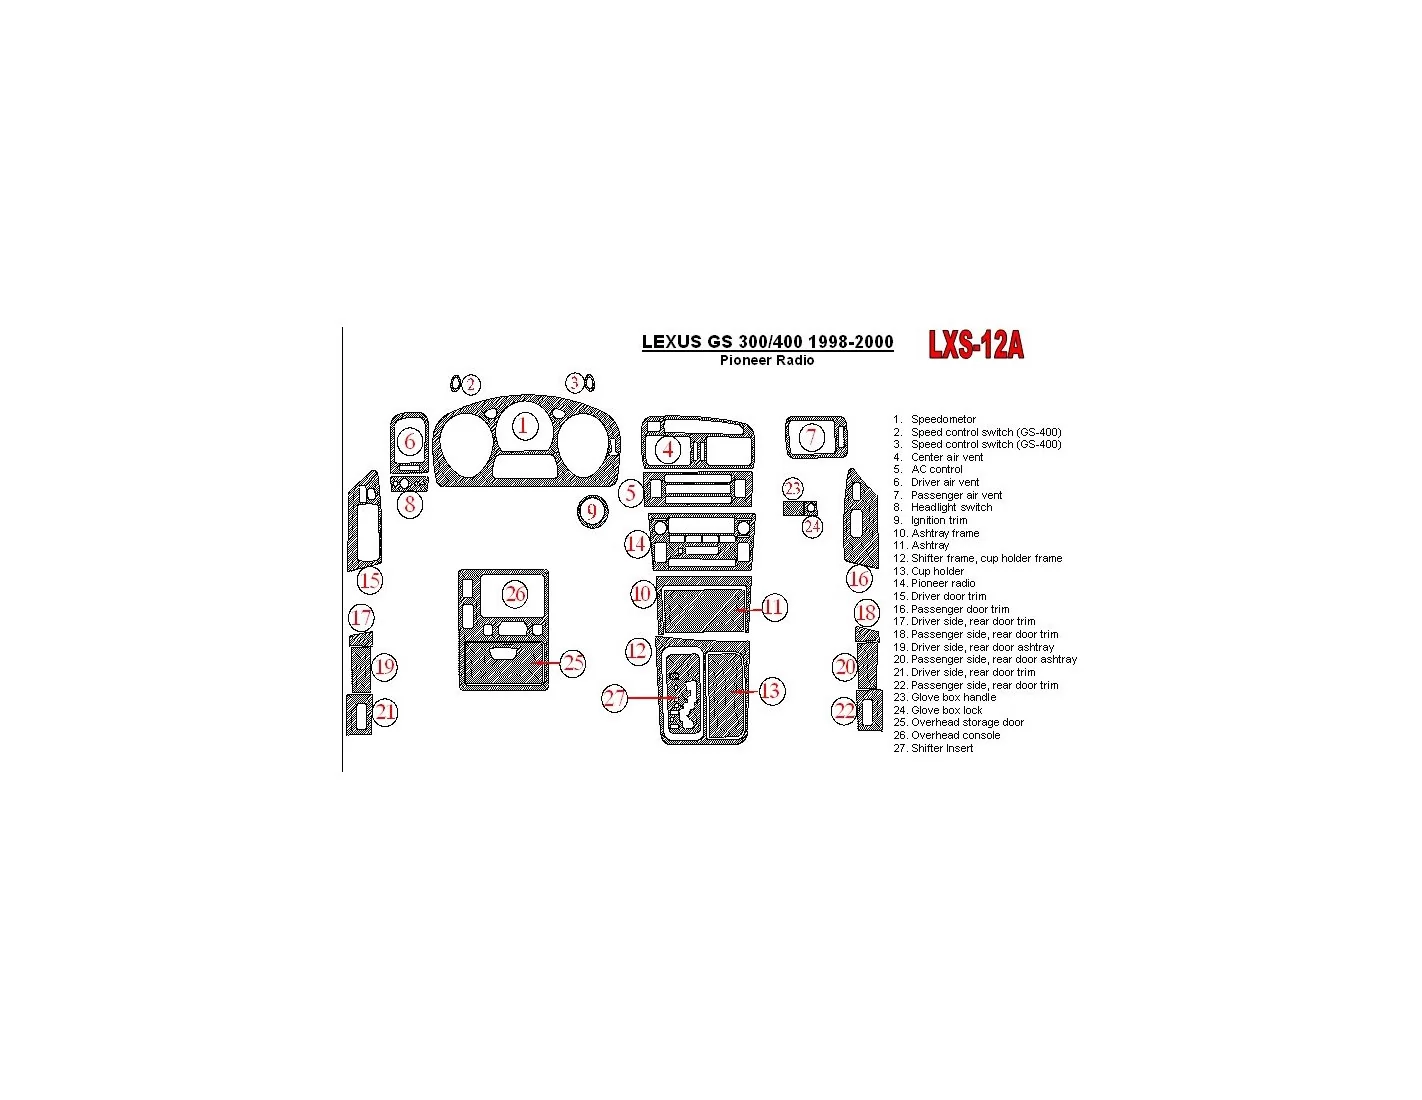 Lexus GS 1998-2000 Pioneer Radio, OEM Compliance,26 Parts set Decor de carlinga su interior